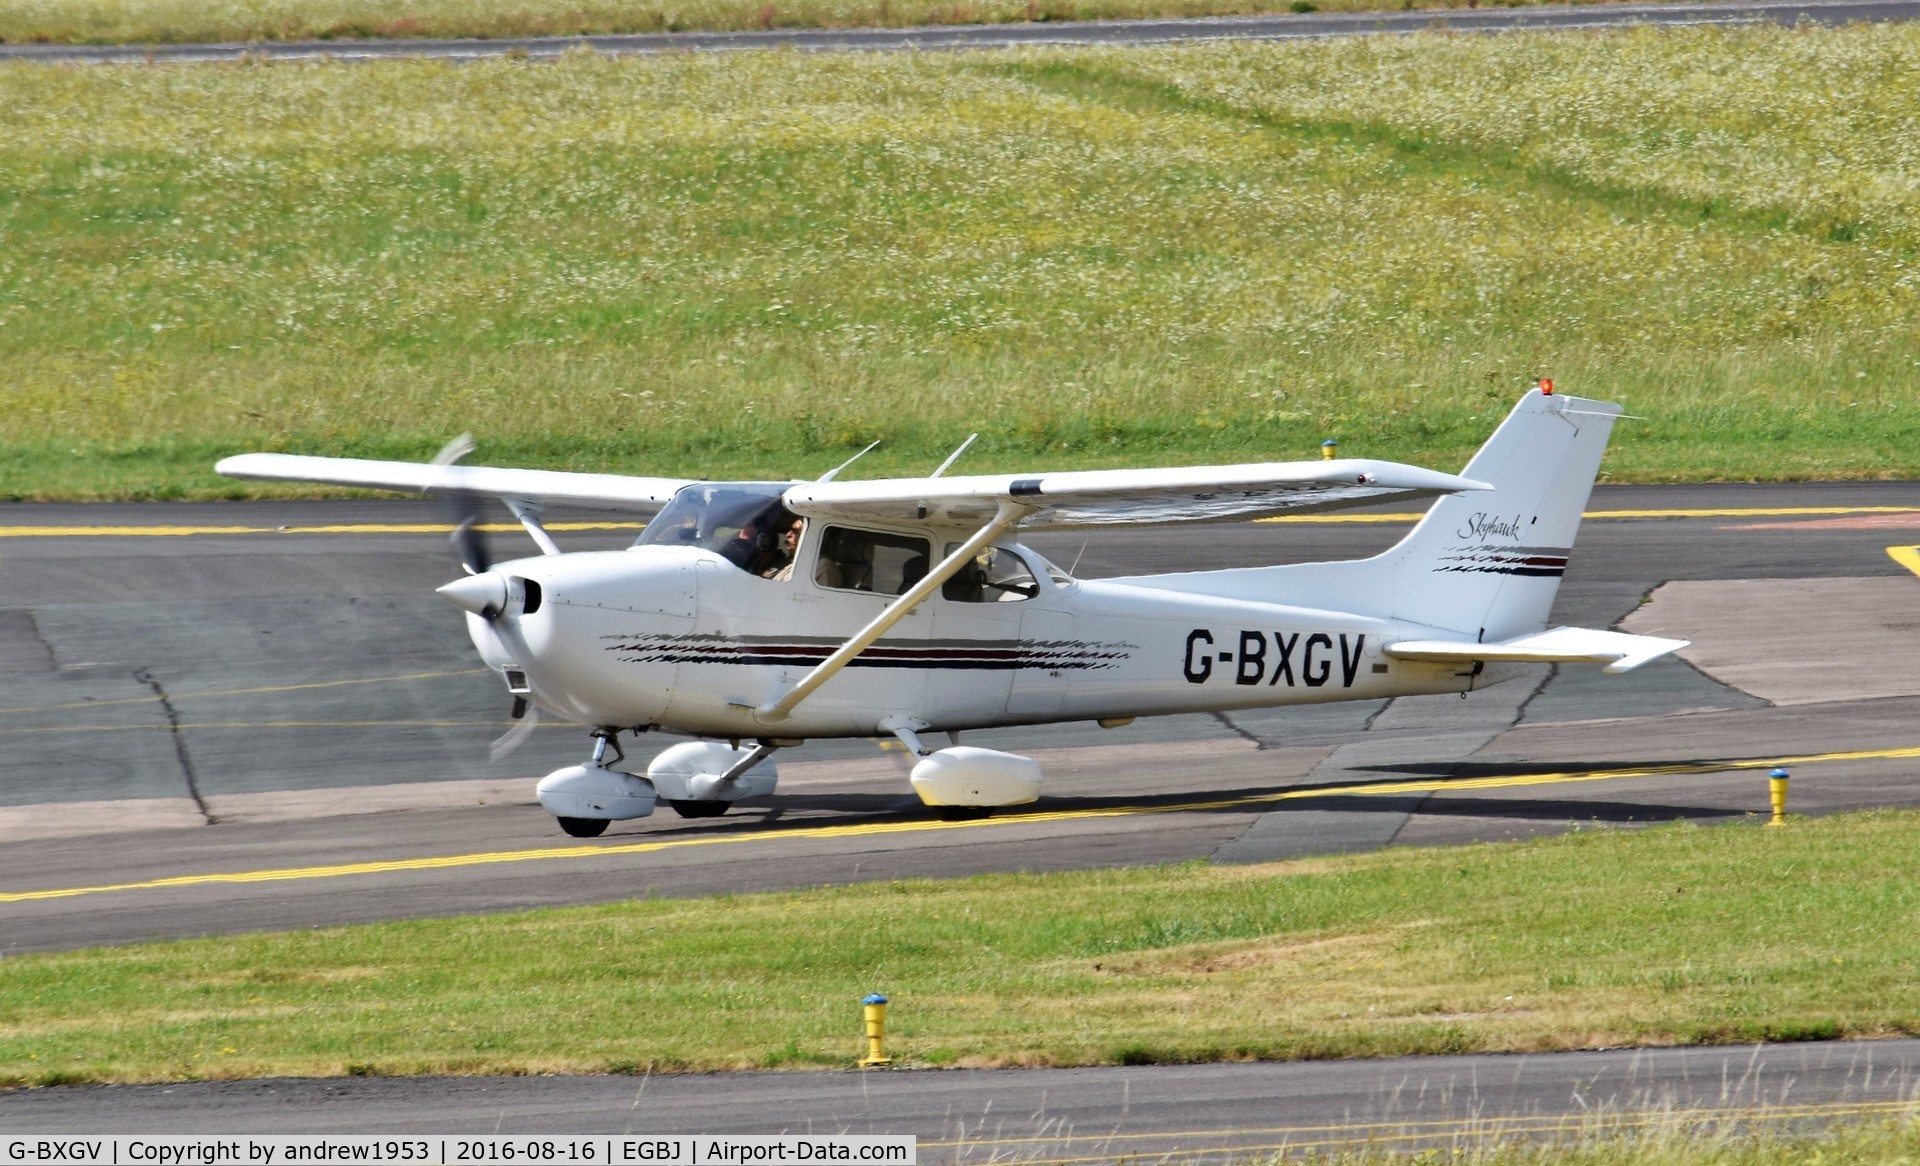 G-BXGV, 1997 Cessna 172R Skyhawk C/N 17280240, G-BXGV at Gloucestershire Airport.